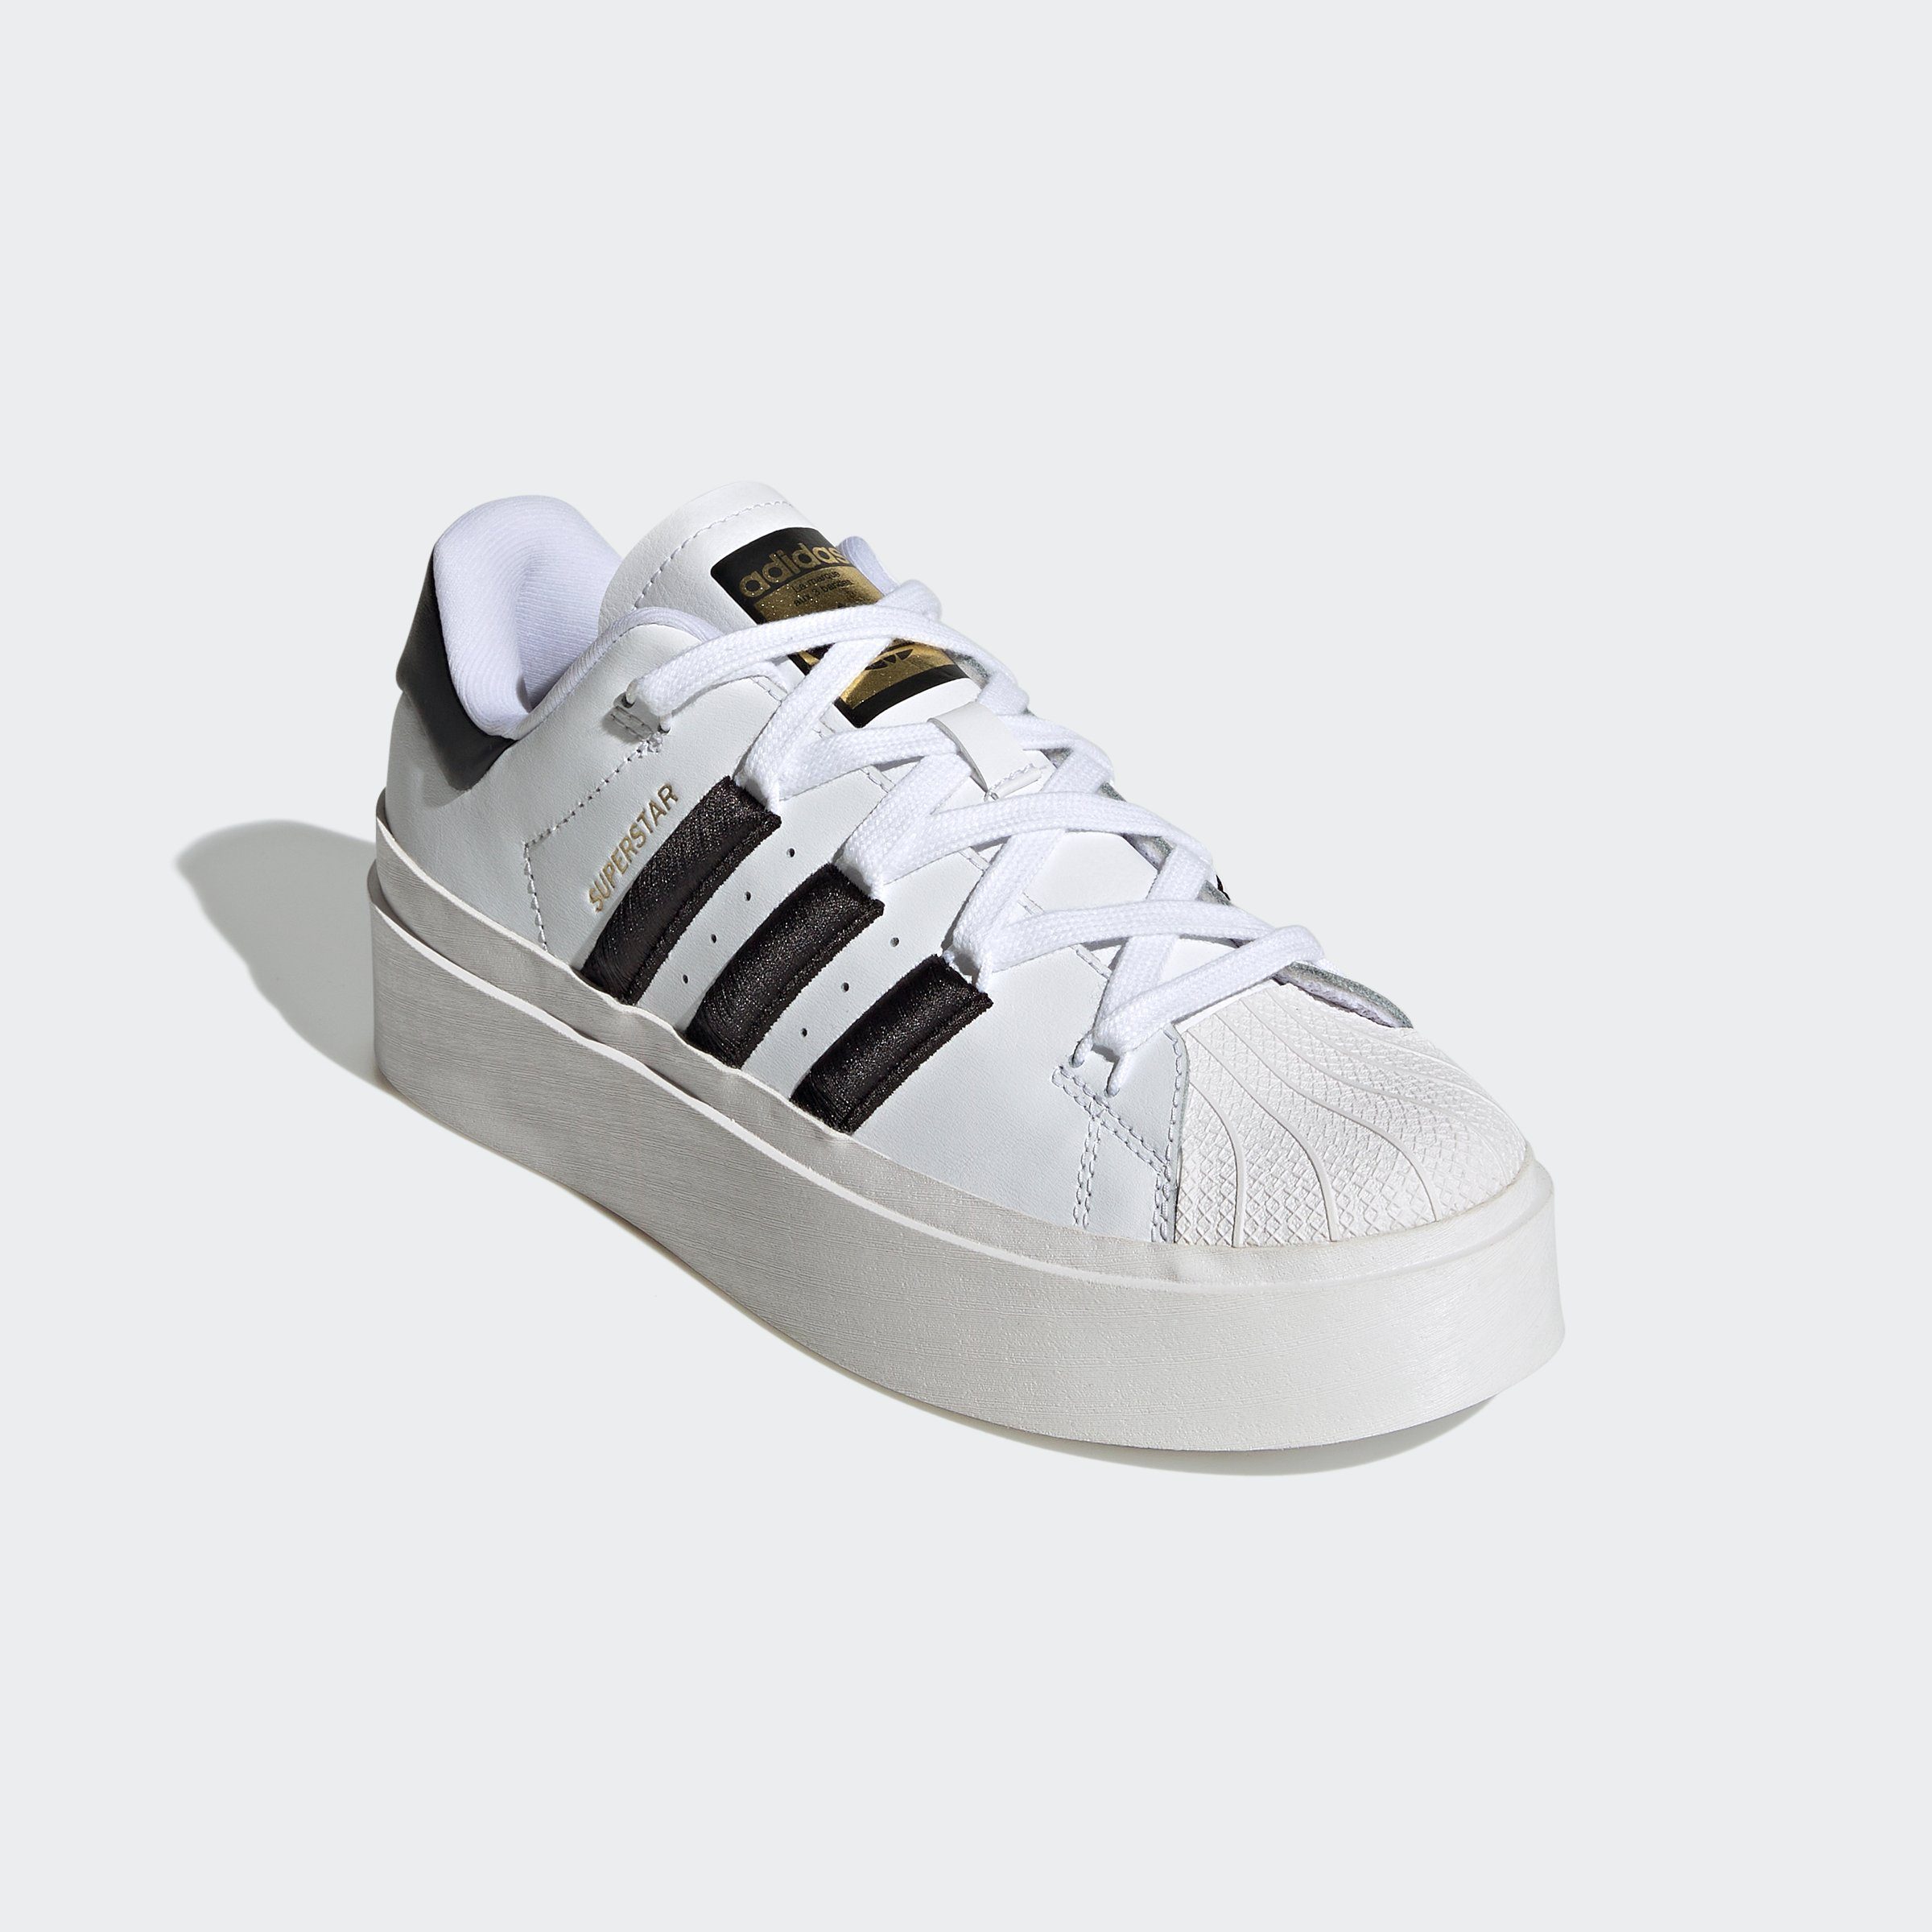 Cloud Core Black Sneaker SUPERSTAR White adidas / Metallic BONEGA Gold / Originals